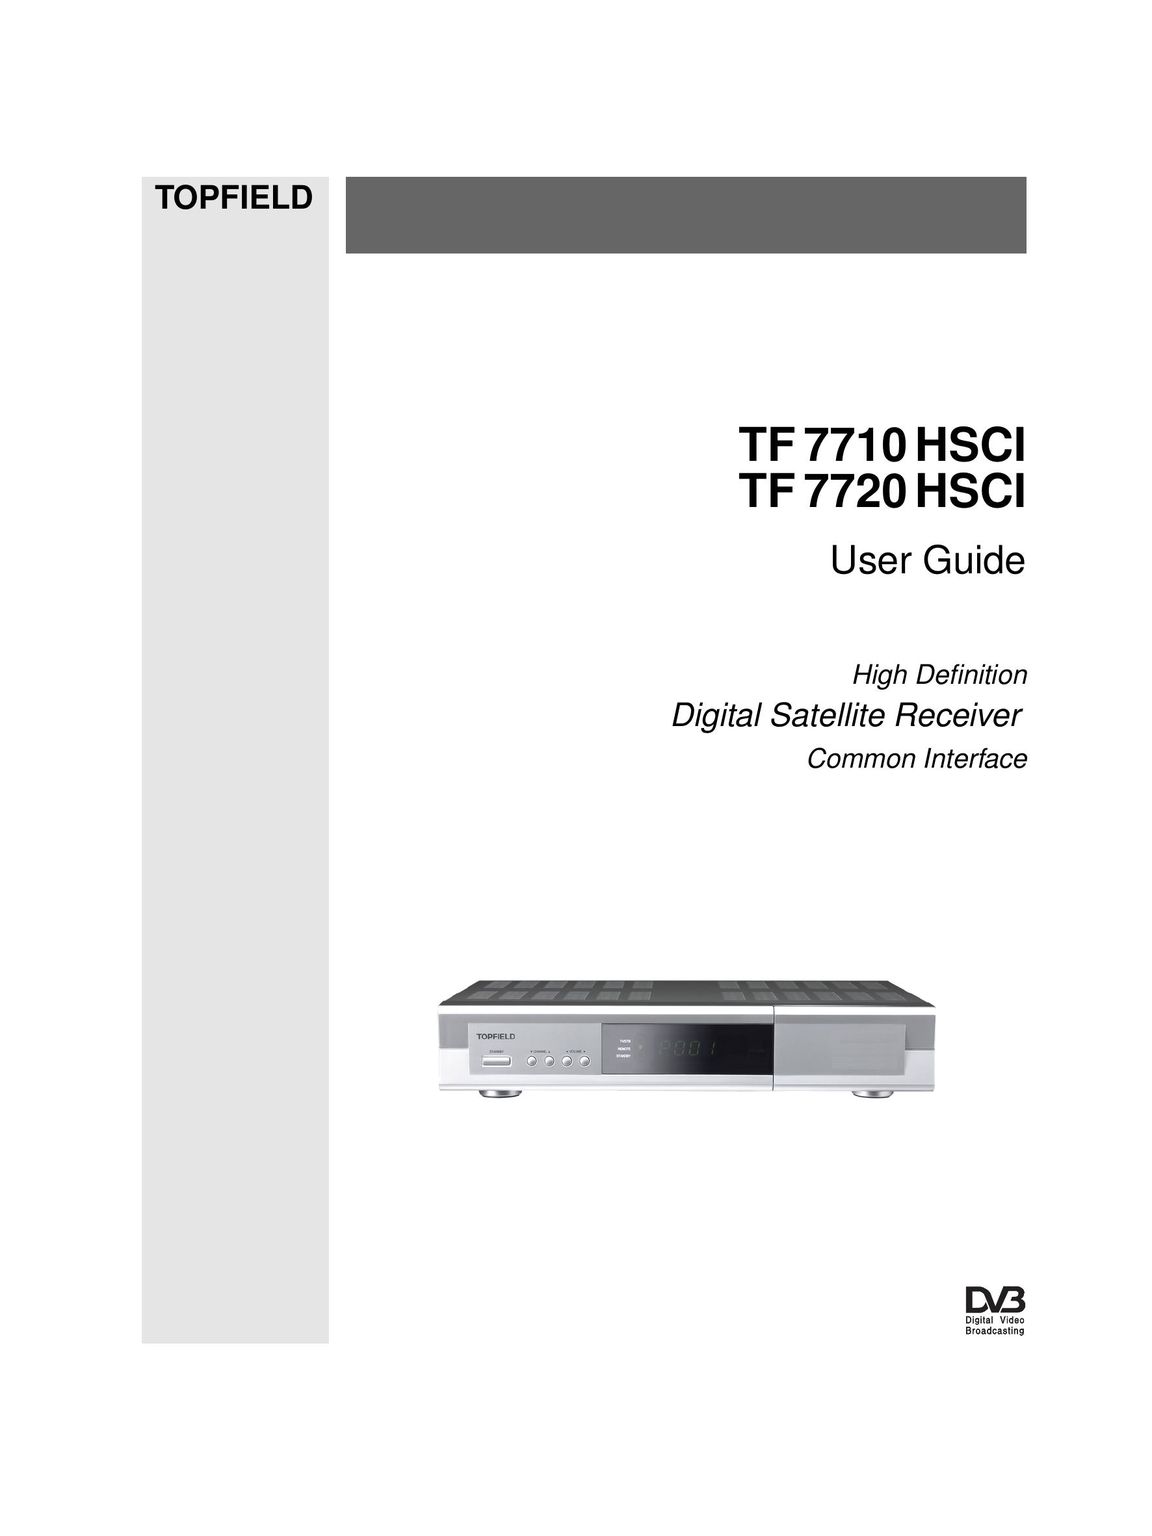 Topfield TF 7720 HSCI Satellite TV System User Manual